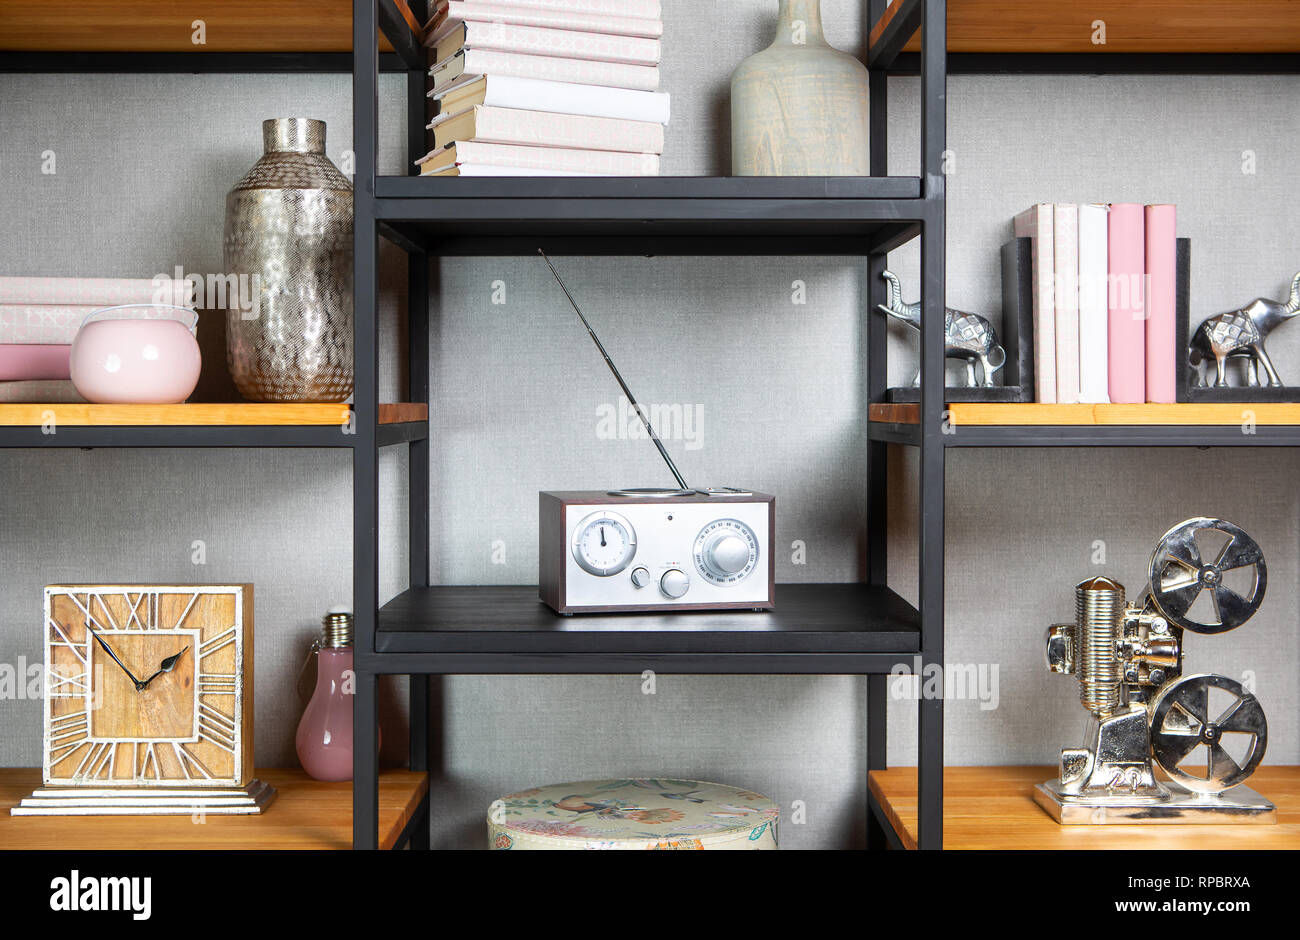 Compact radio on bookshelf in vintage living room interior Stock Photo